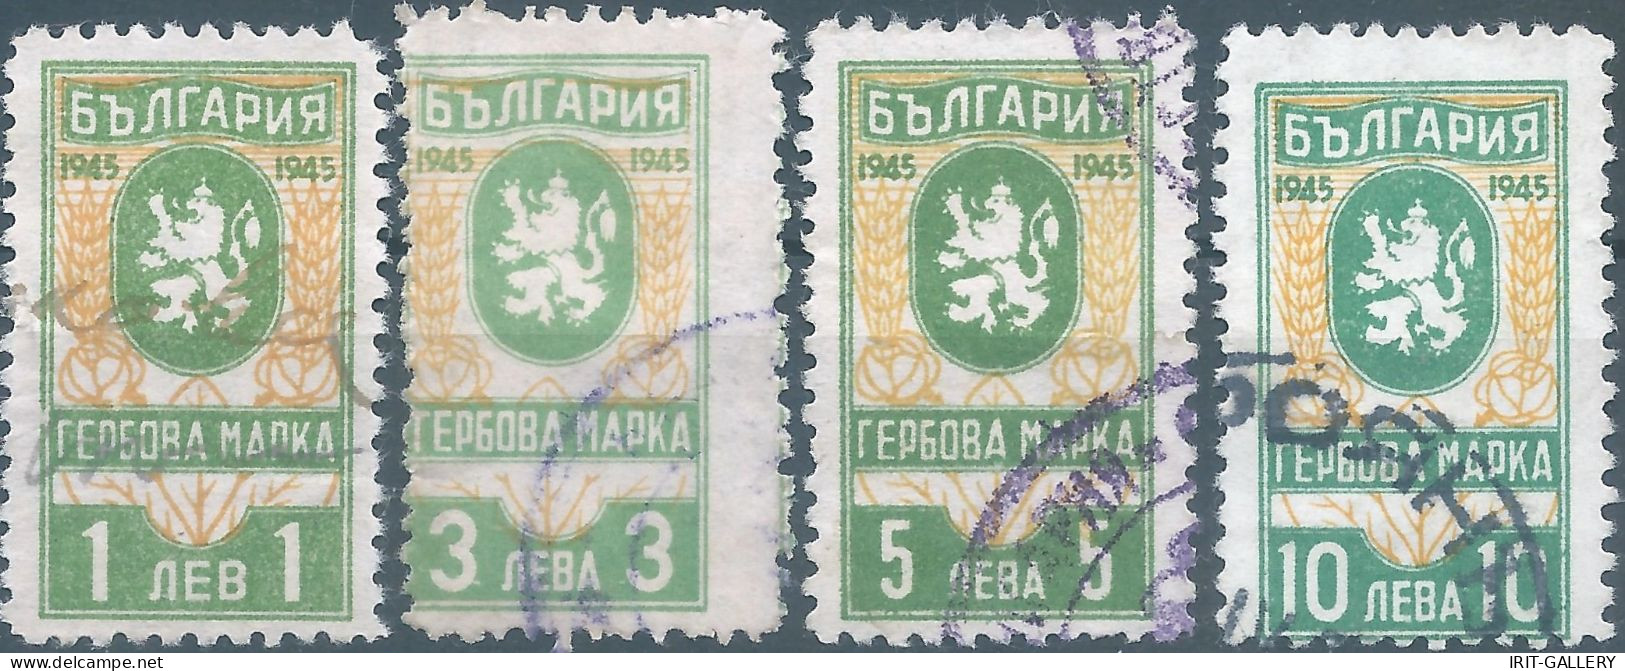 Bulgaria - Bulgarien - Bulgare,1945 Revenue Stamp Tax Fiscal,Used - Dienstzegels